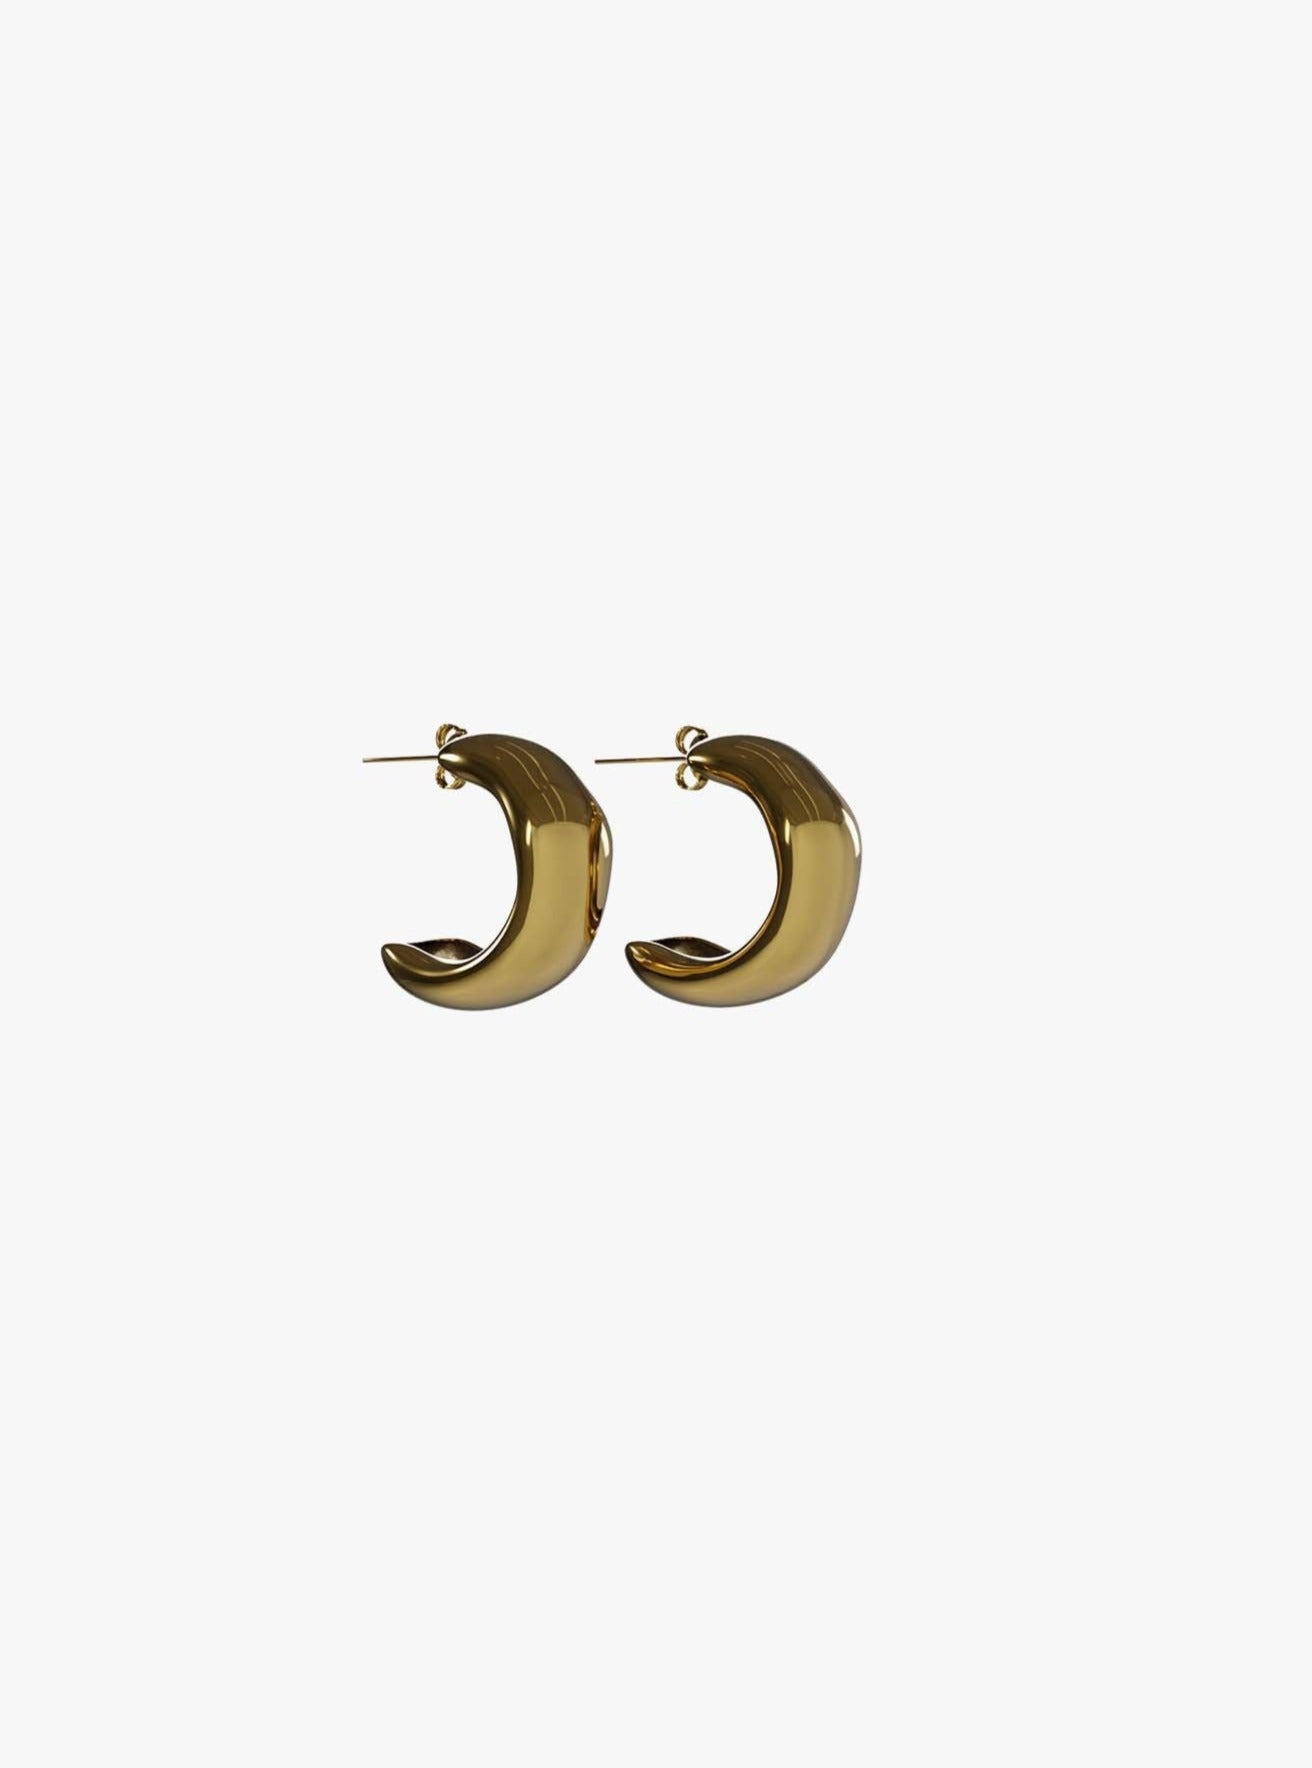 Dia gold earring (pair)